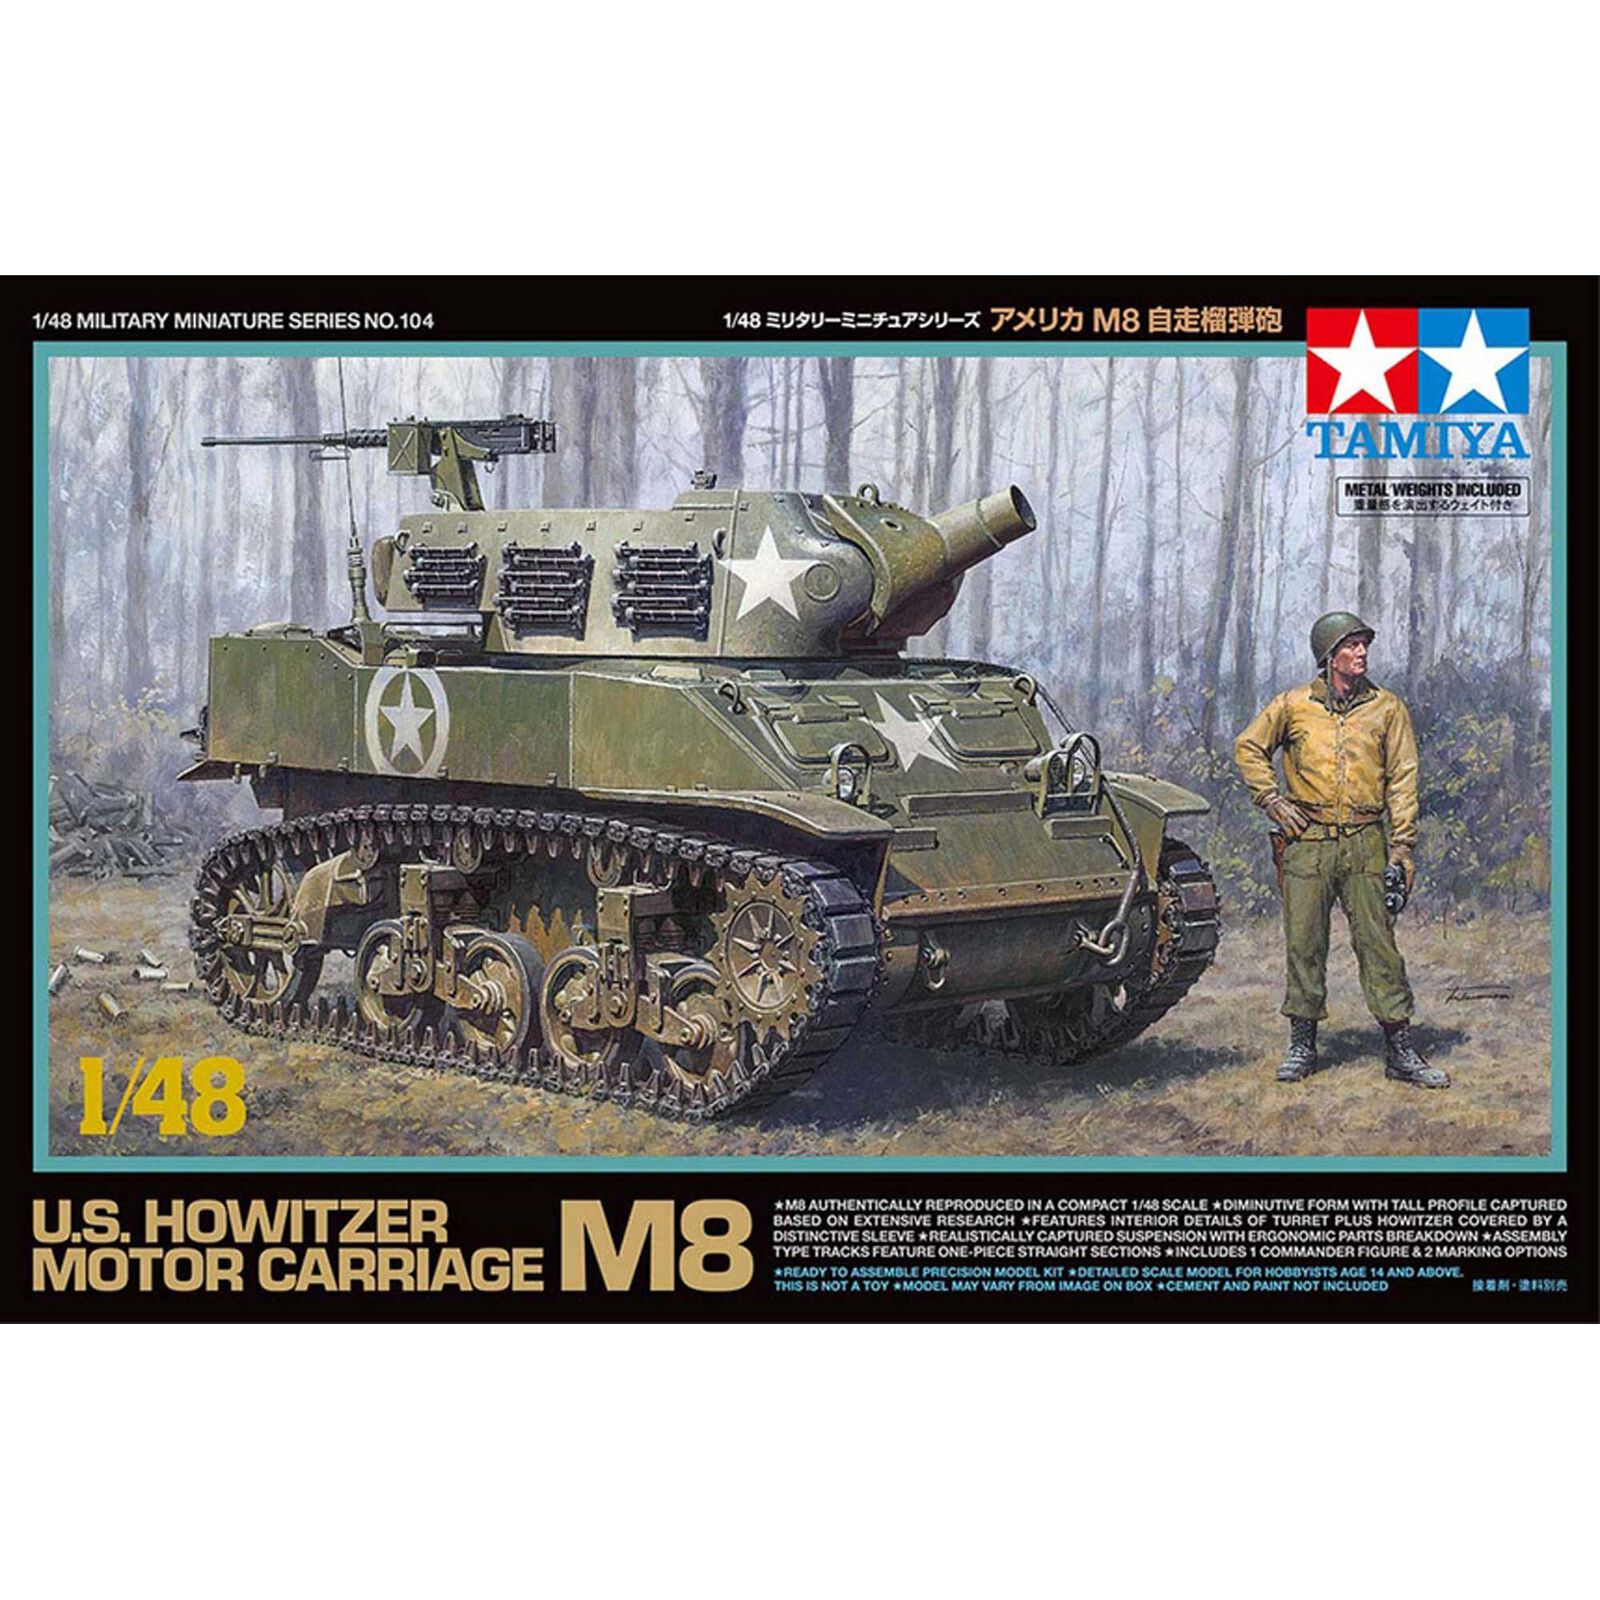 1/48 U.S. Howitzer Motor Carriage M8